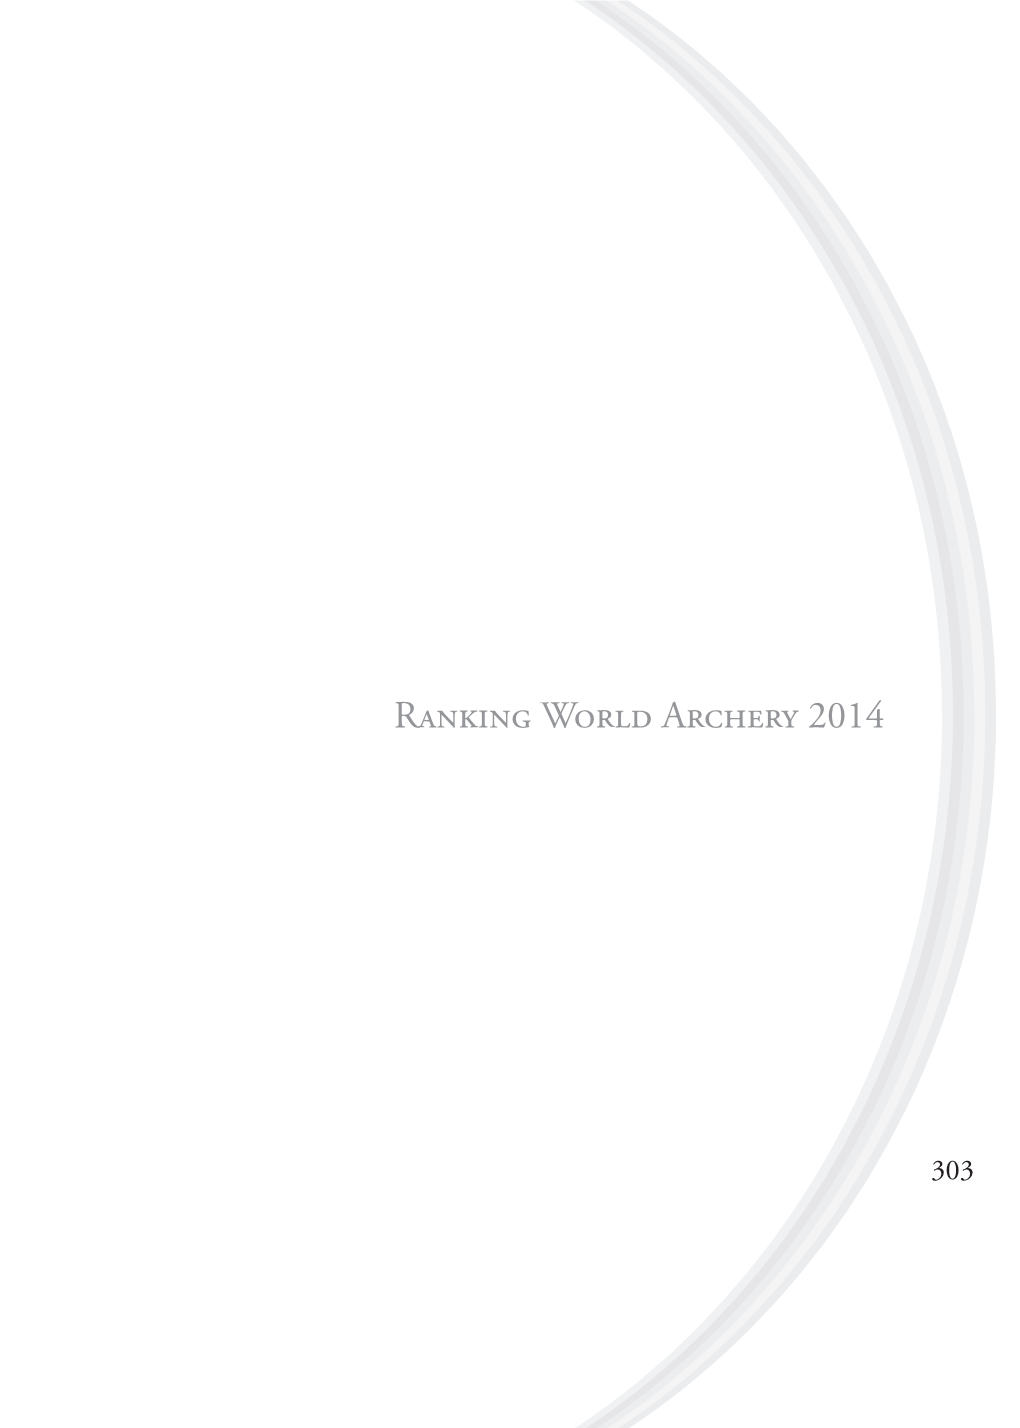 Ranking World Archery 2014